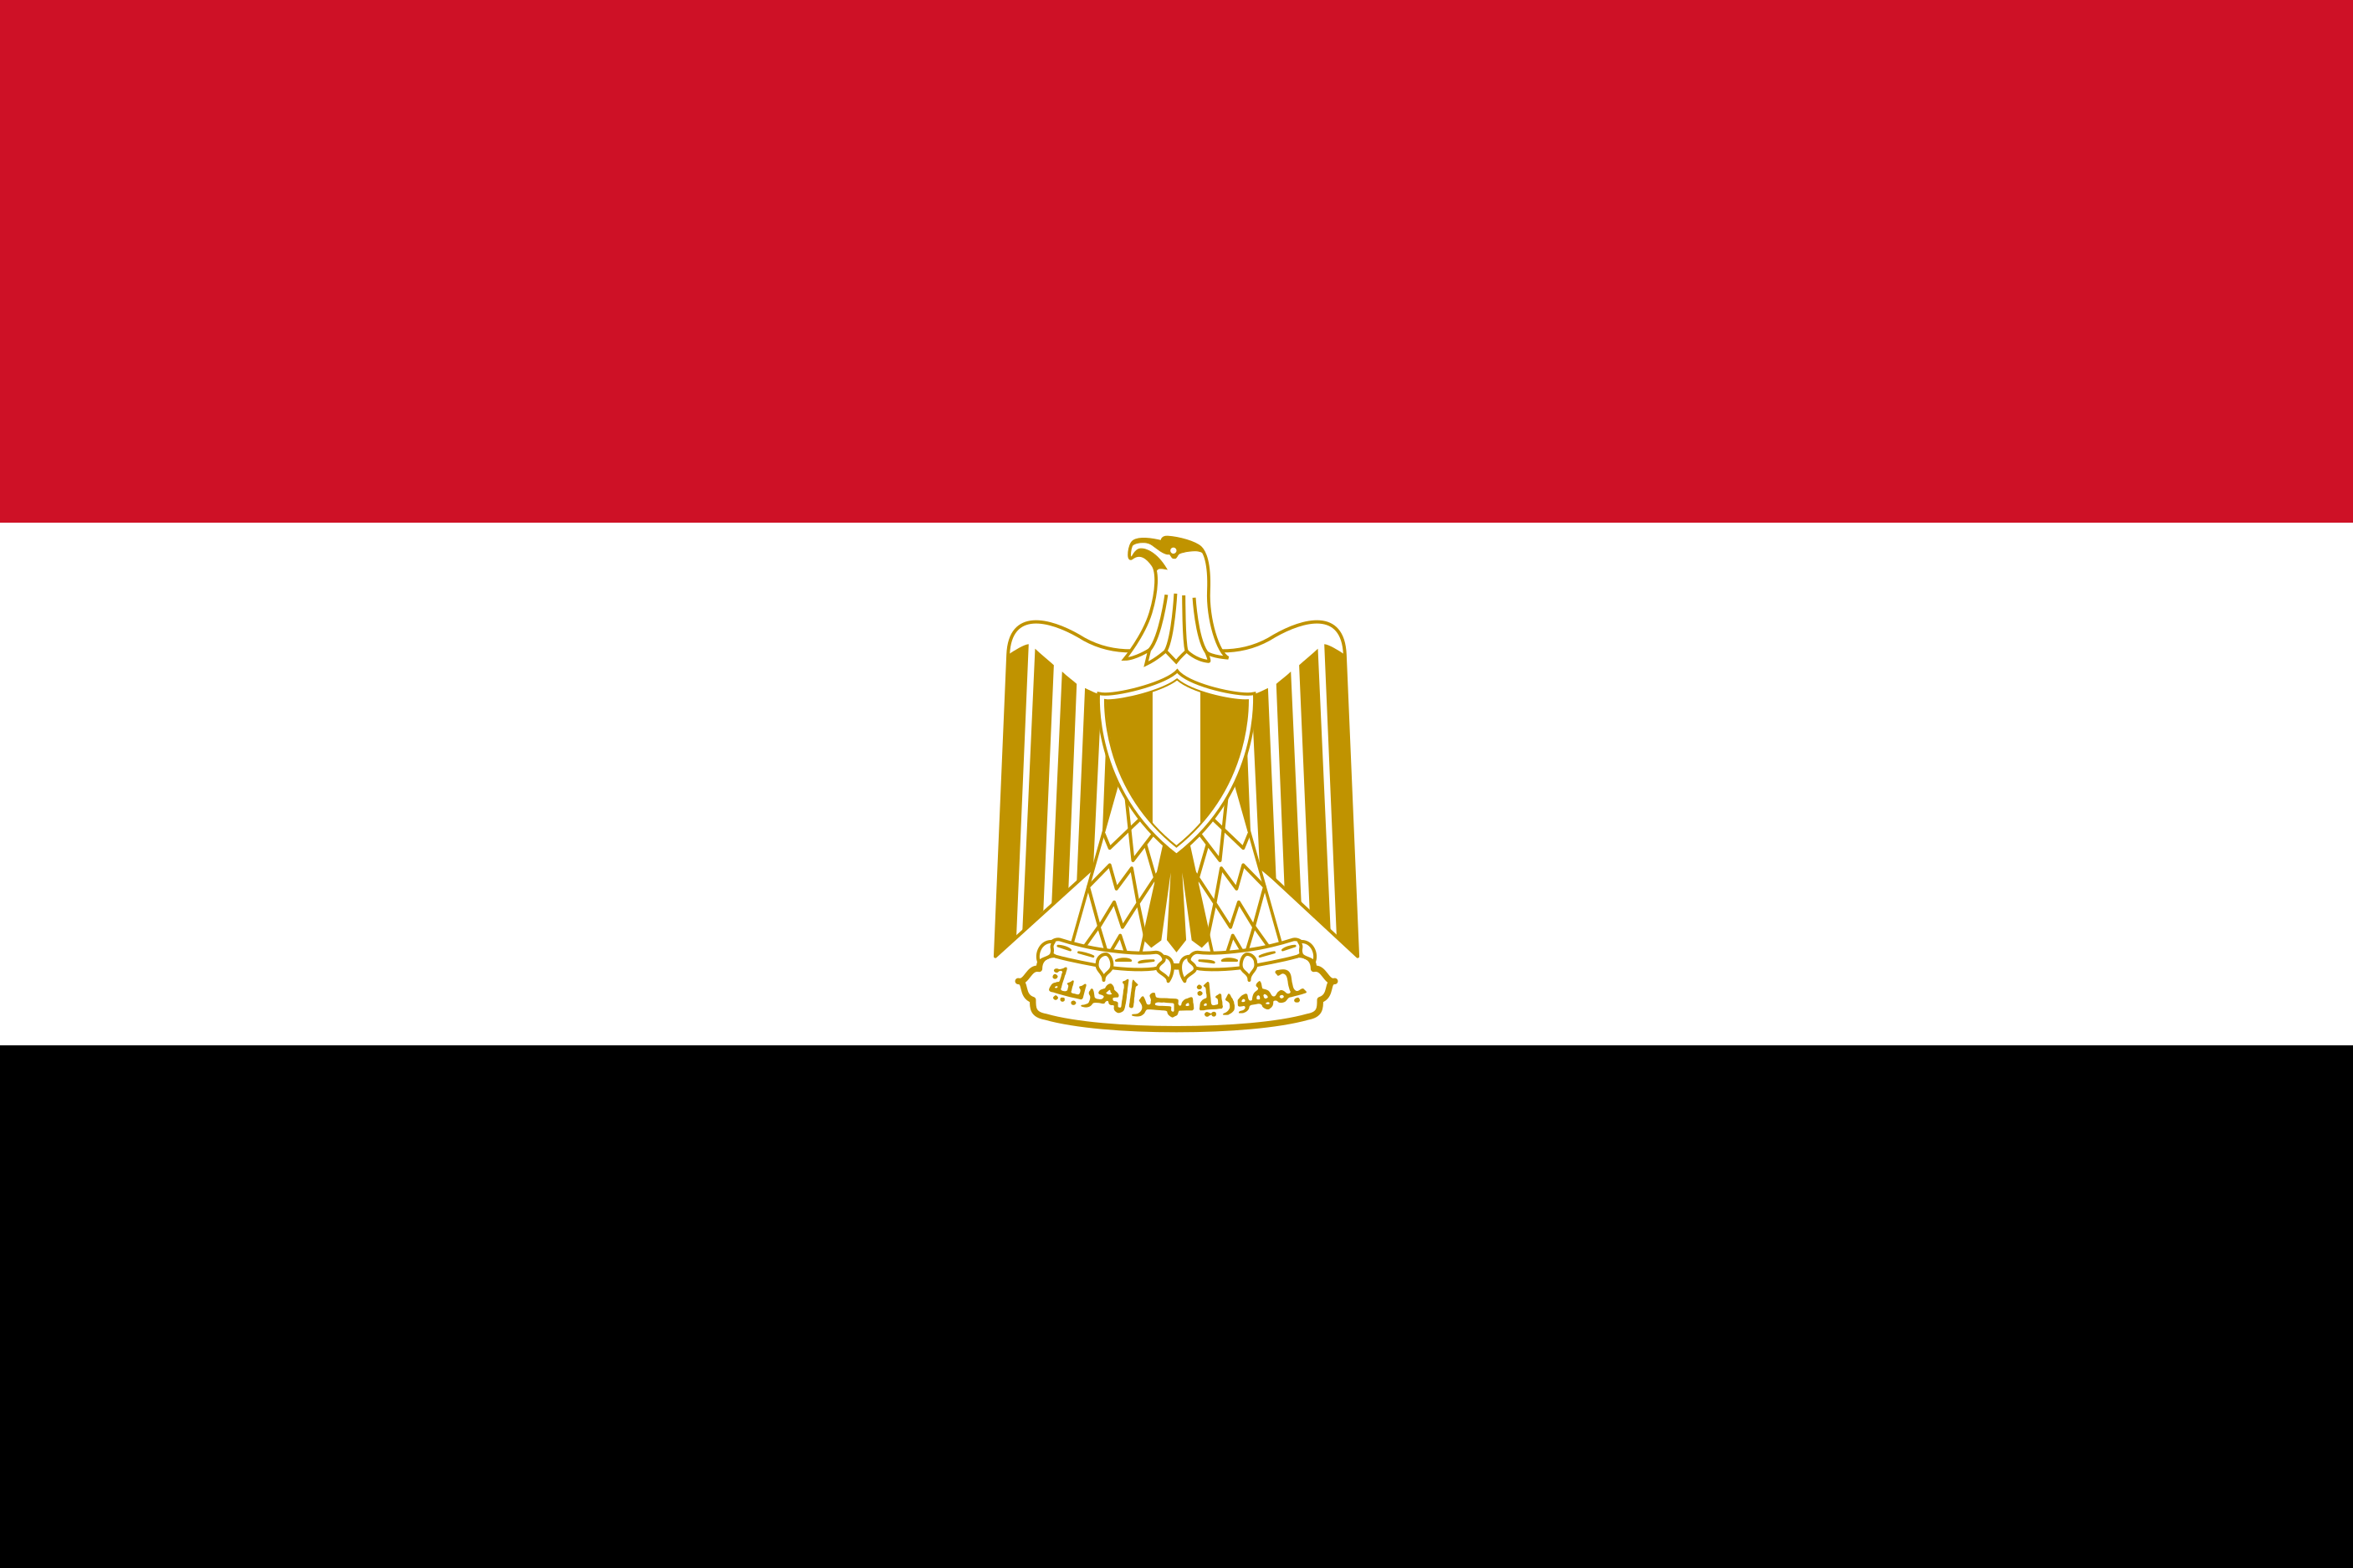 Egypt Flag Image - Free Download